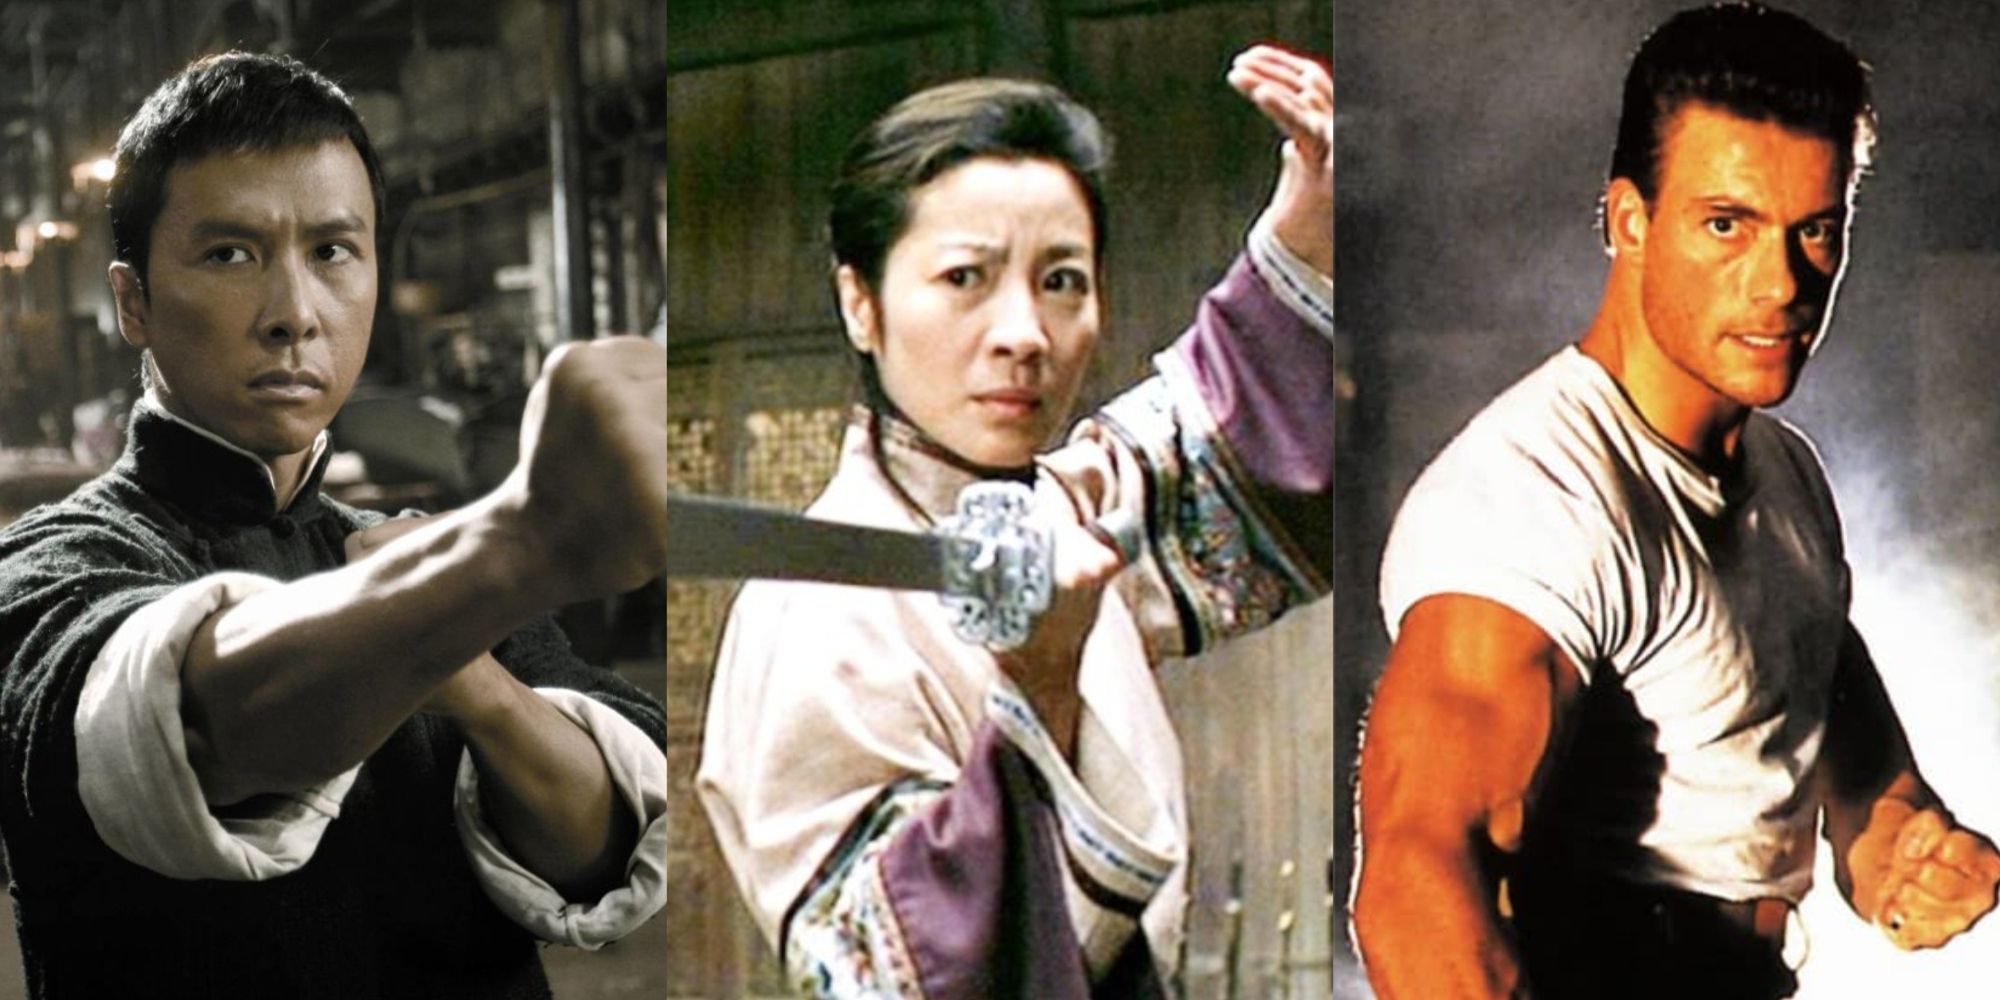 Female Martial Artists Everyone Should Know - House of Dragons Taekwondo